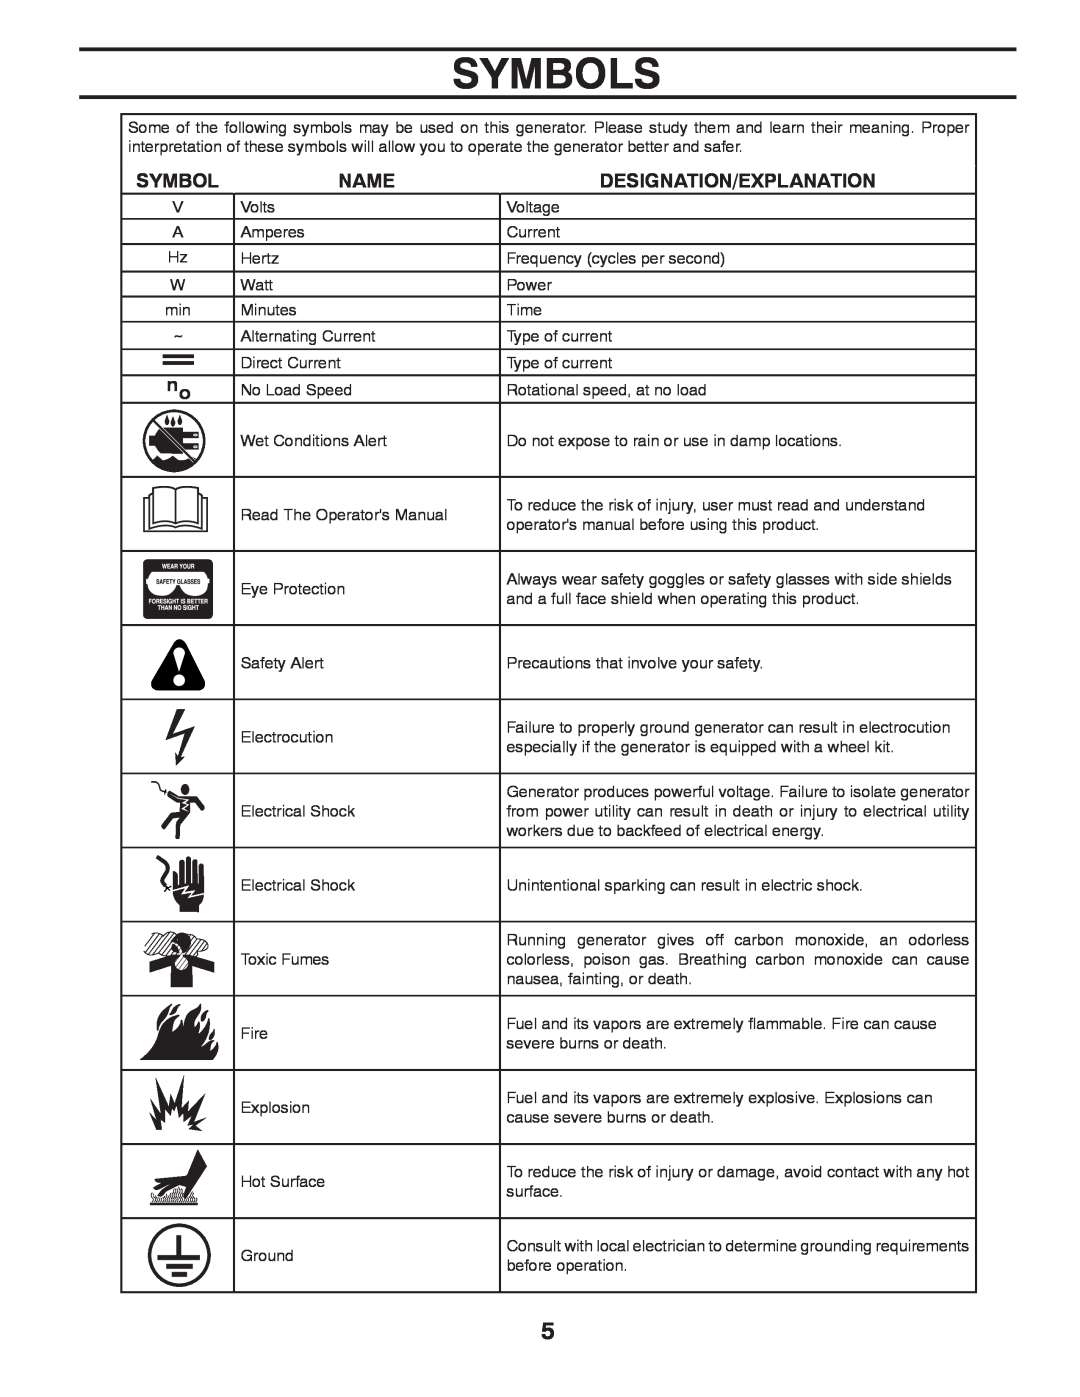 Poulan 420077 owner manual Symbols, Name, Designation/Explanation 